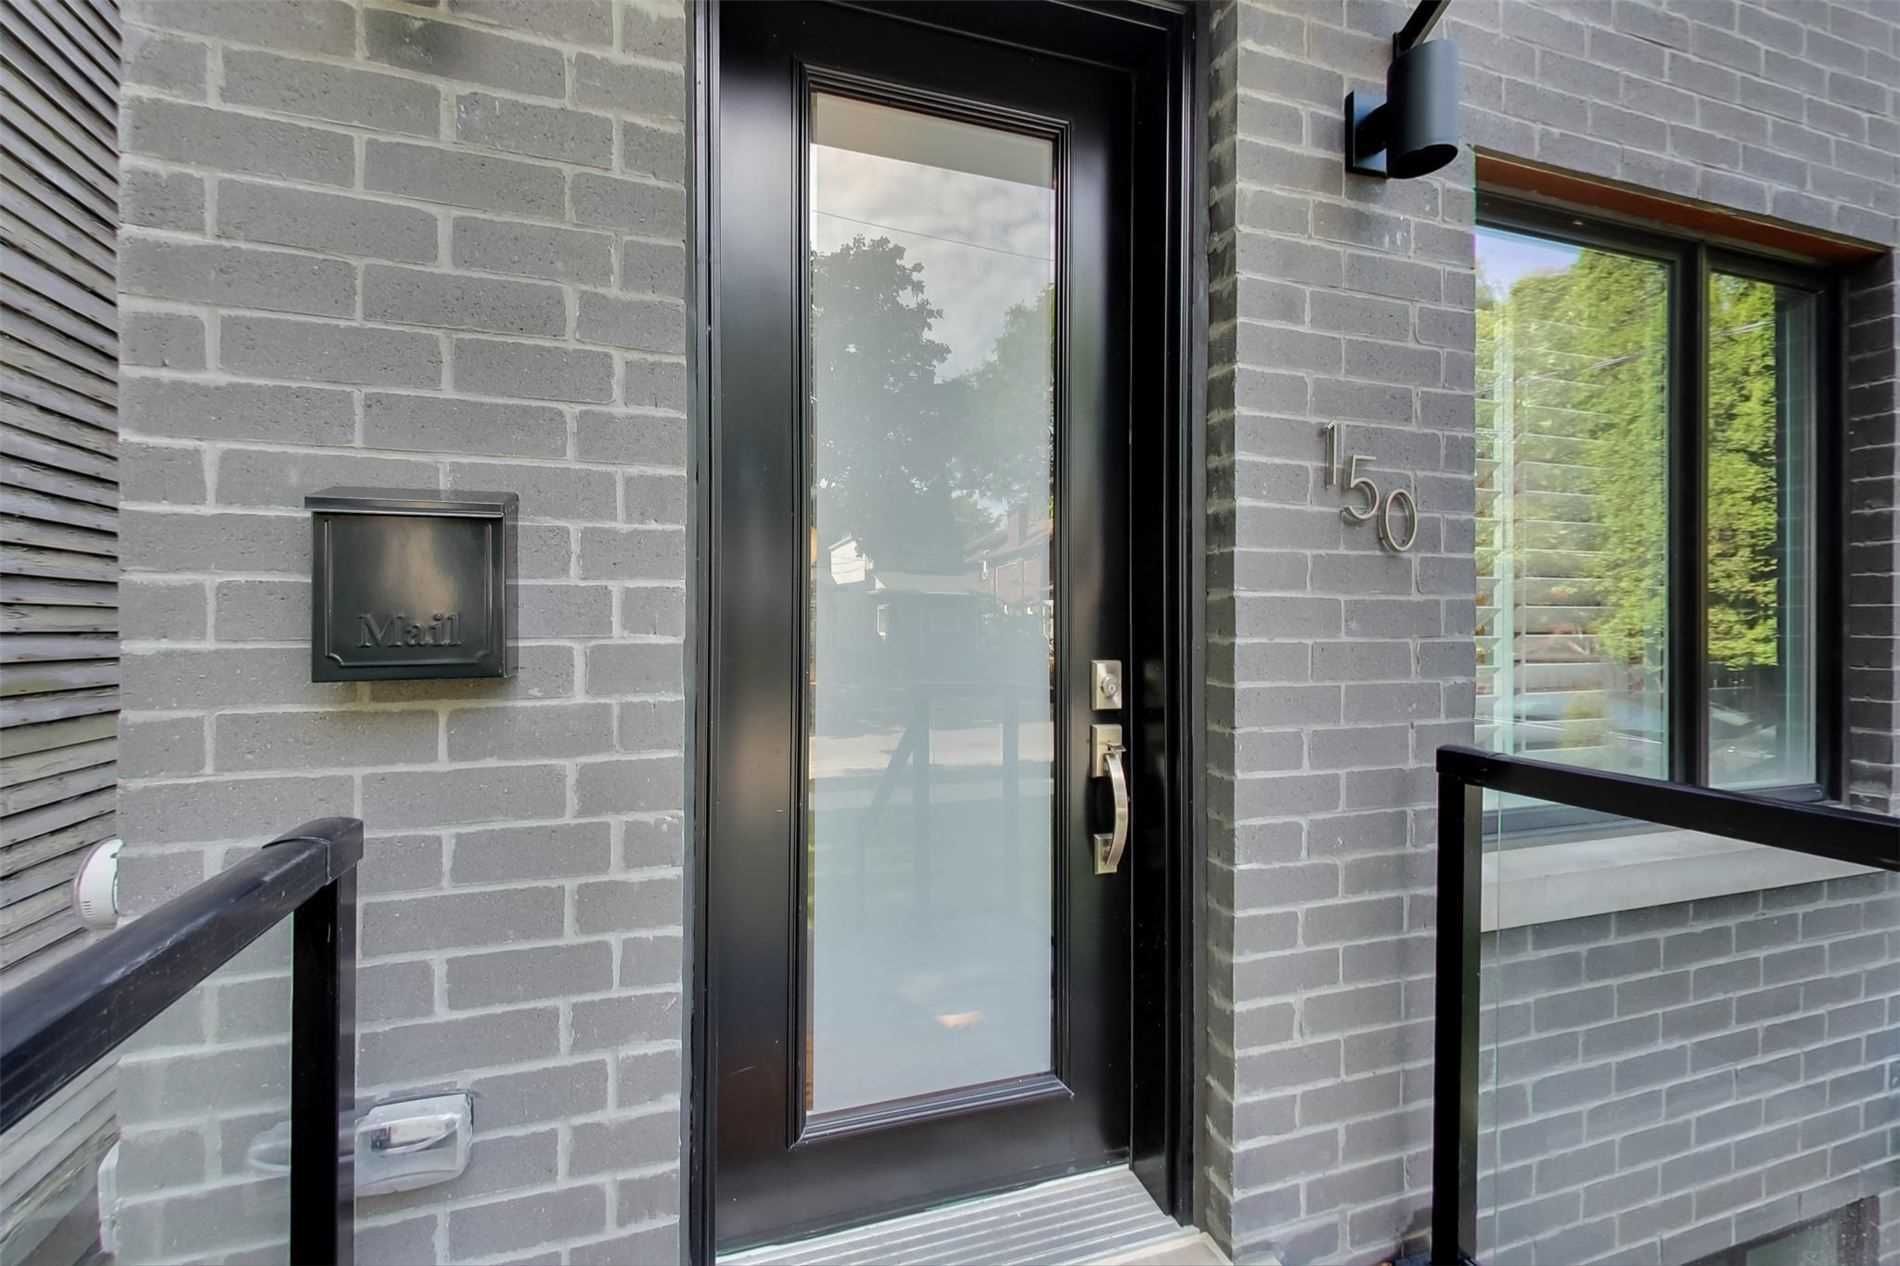 Main Photo: 150 Rhodes Avenue in Toronto: Greenwood-Coxwell House (2-Storey) for sale (Toronto E01)  : MLS®# E5372075